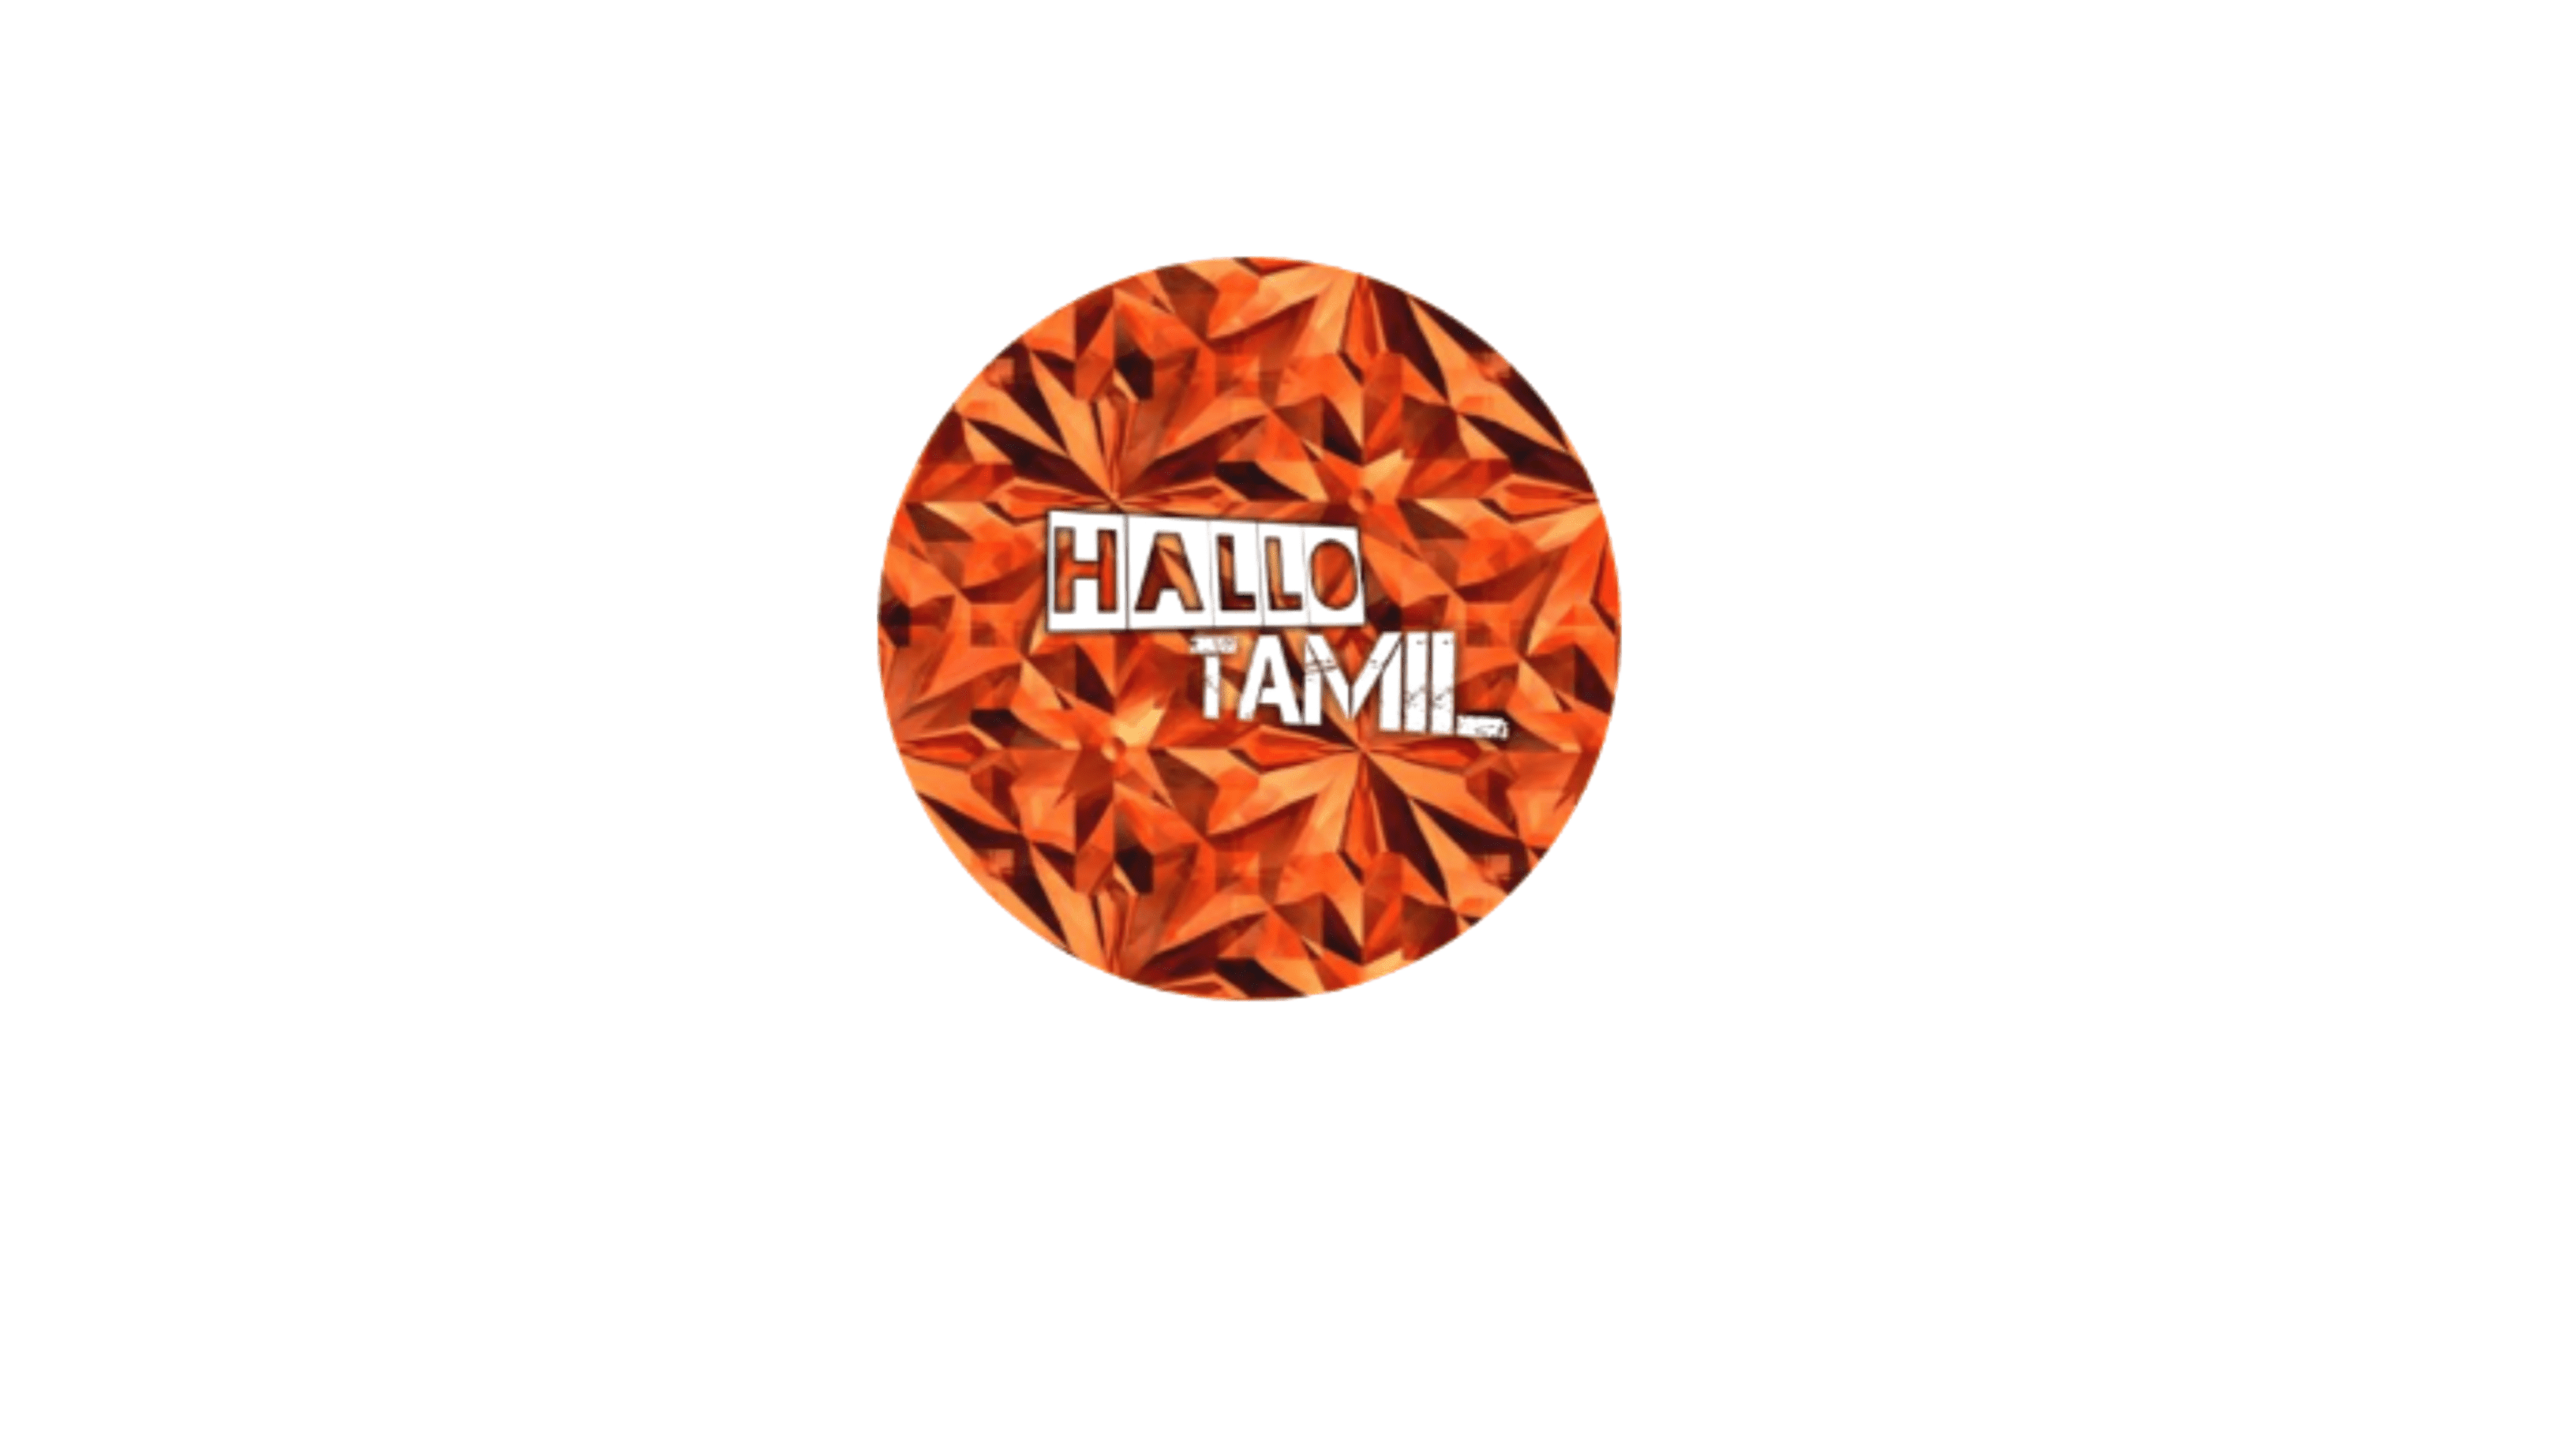 Hallo Tamil